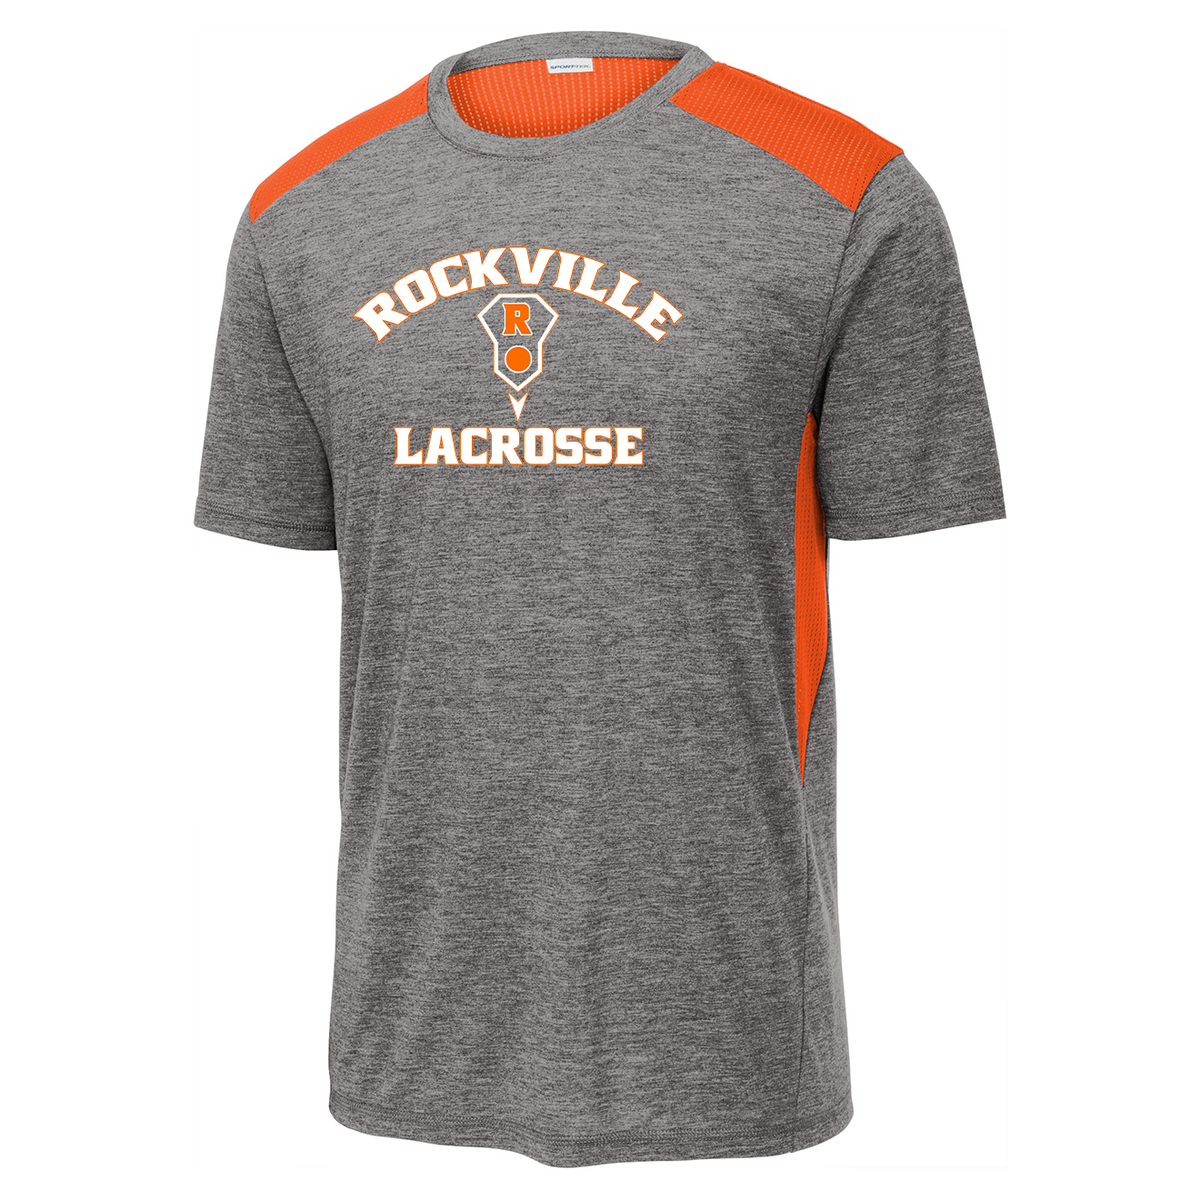 Rockville HS Girls Lacrosse Tri-Blend Draft Tee